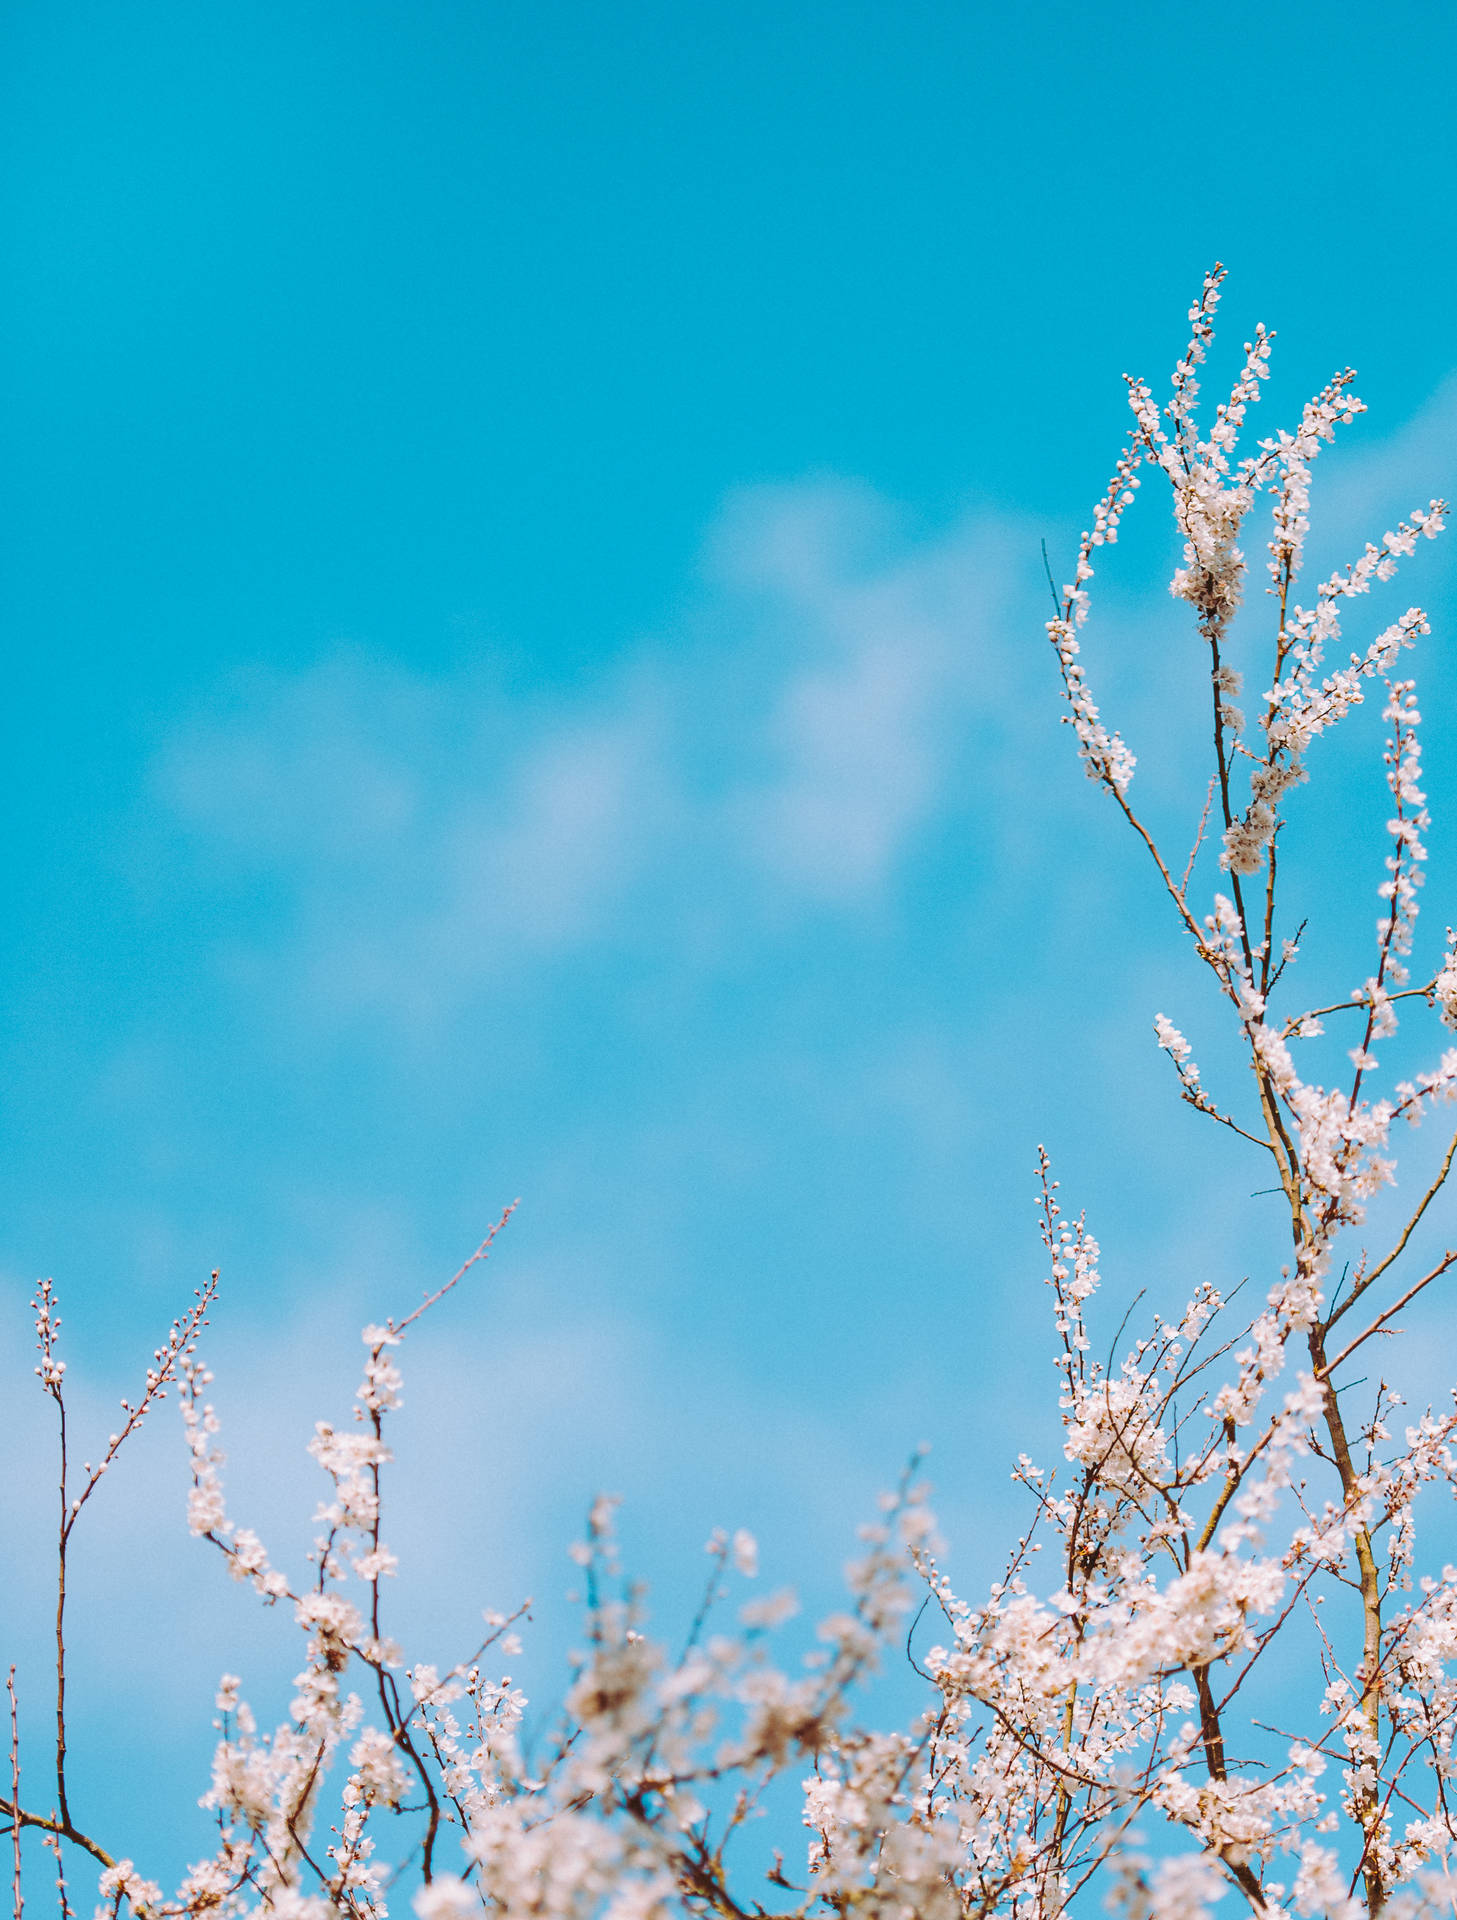 White Flowers Under Blue Sky Background